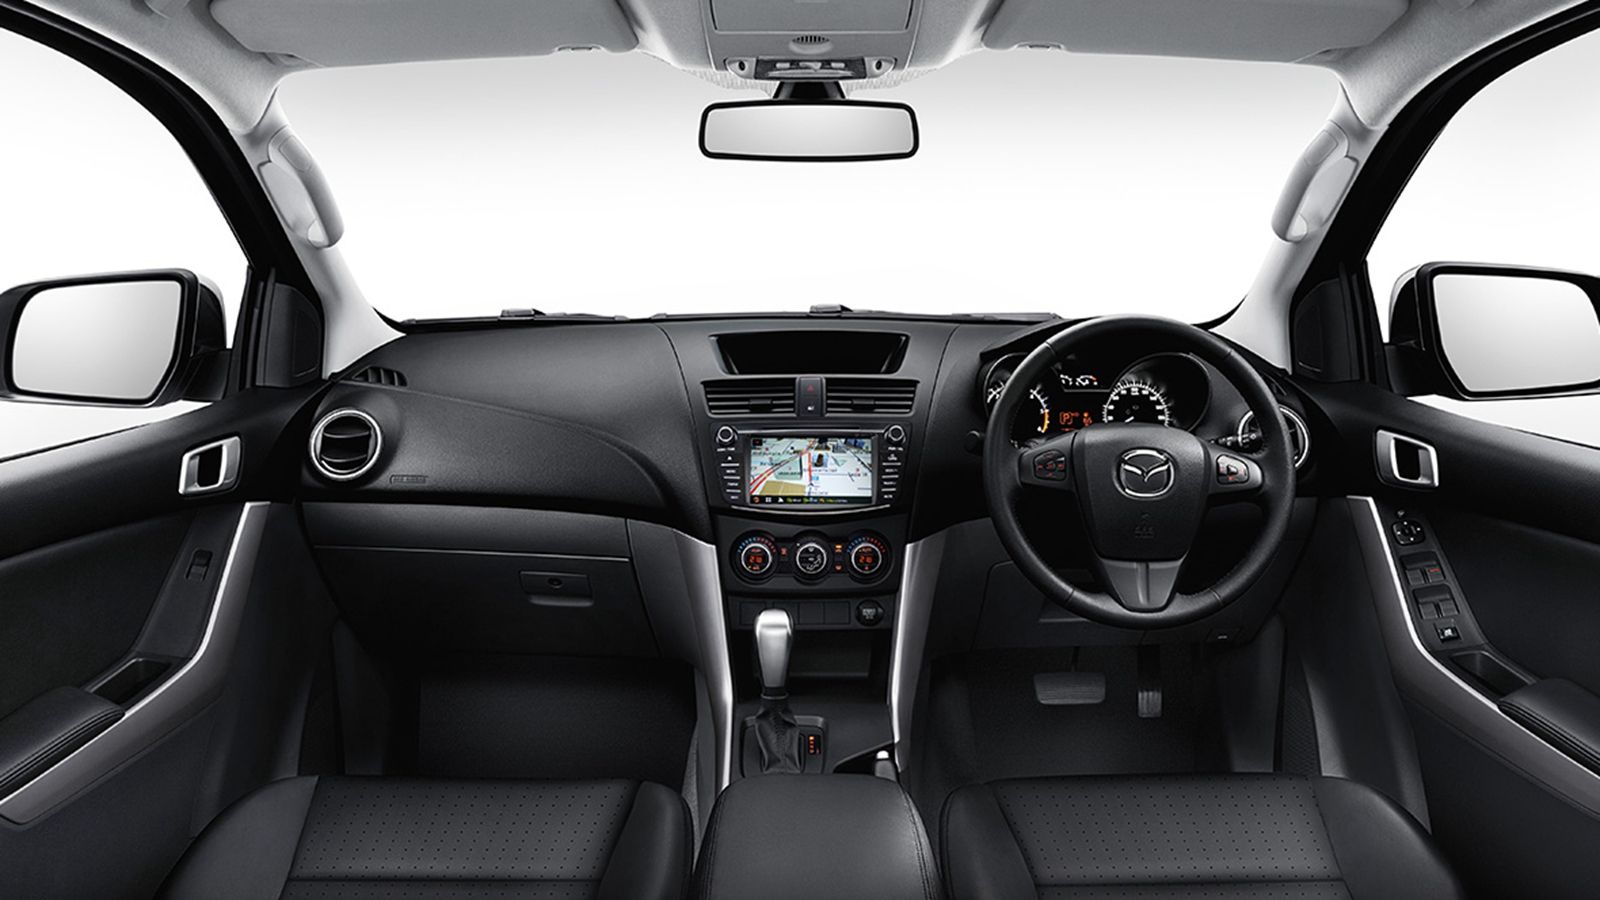 2021 Mazda BT-50 Upcoming Version Interior 001